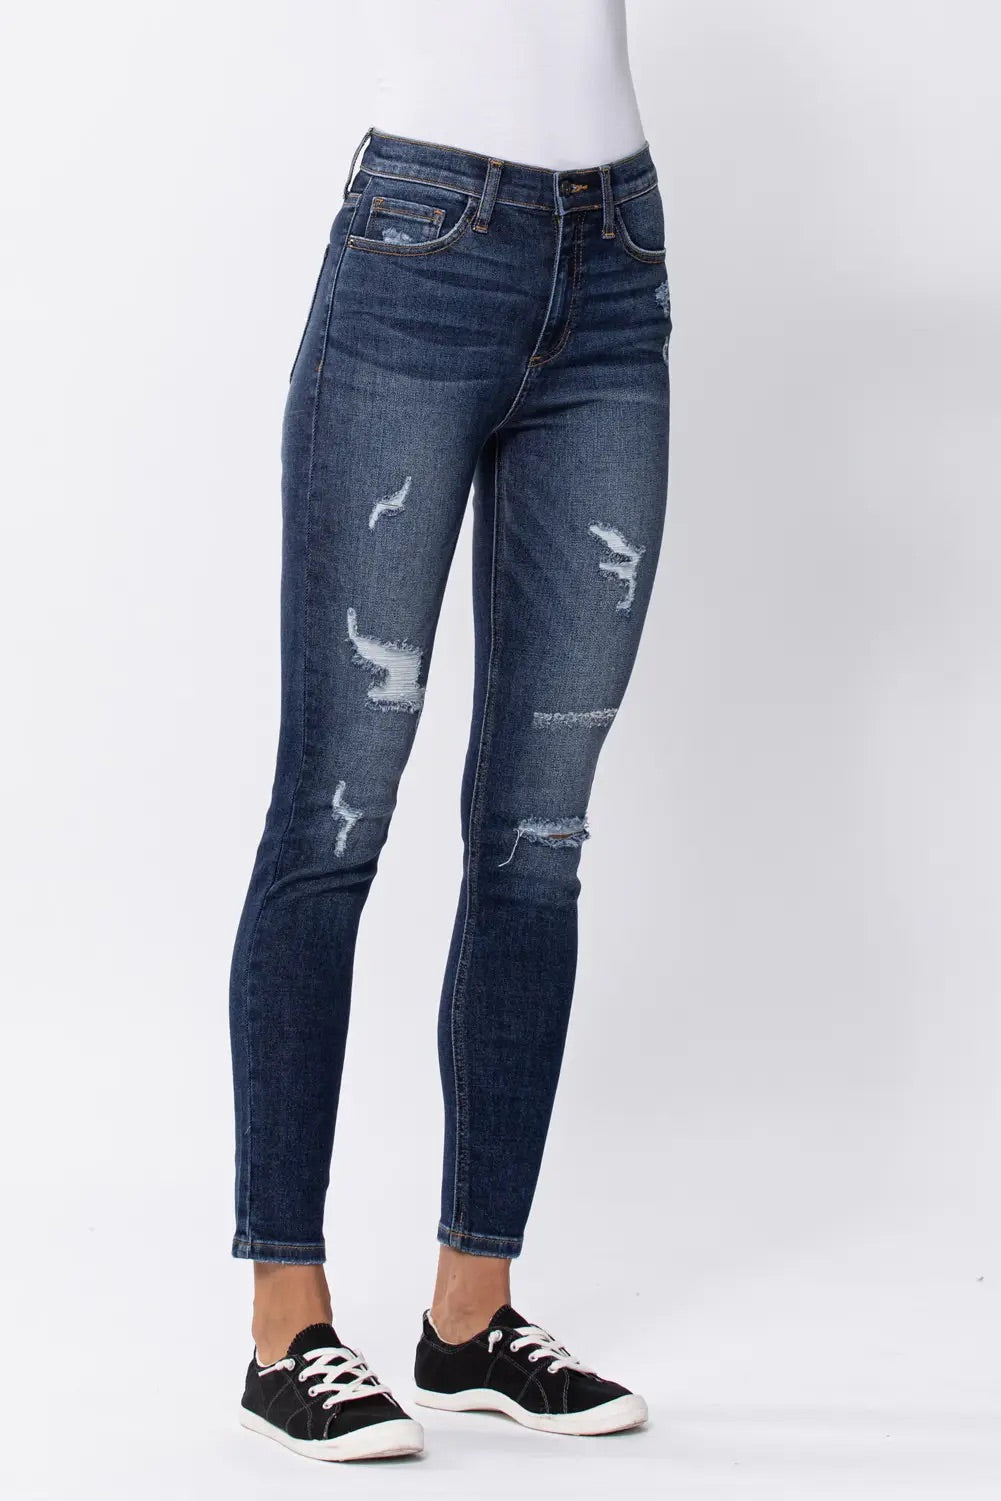 Aubrey Distressed Jeans